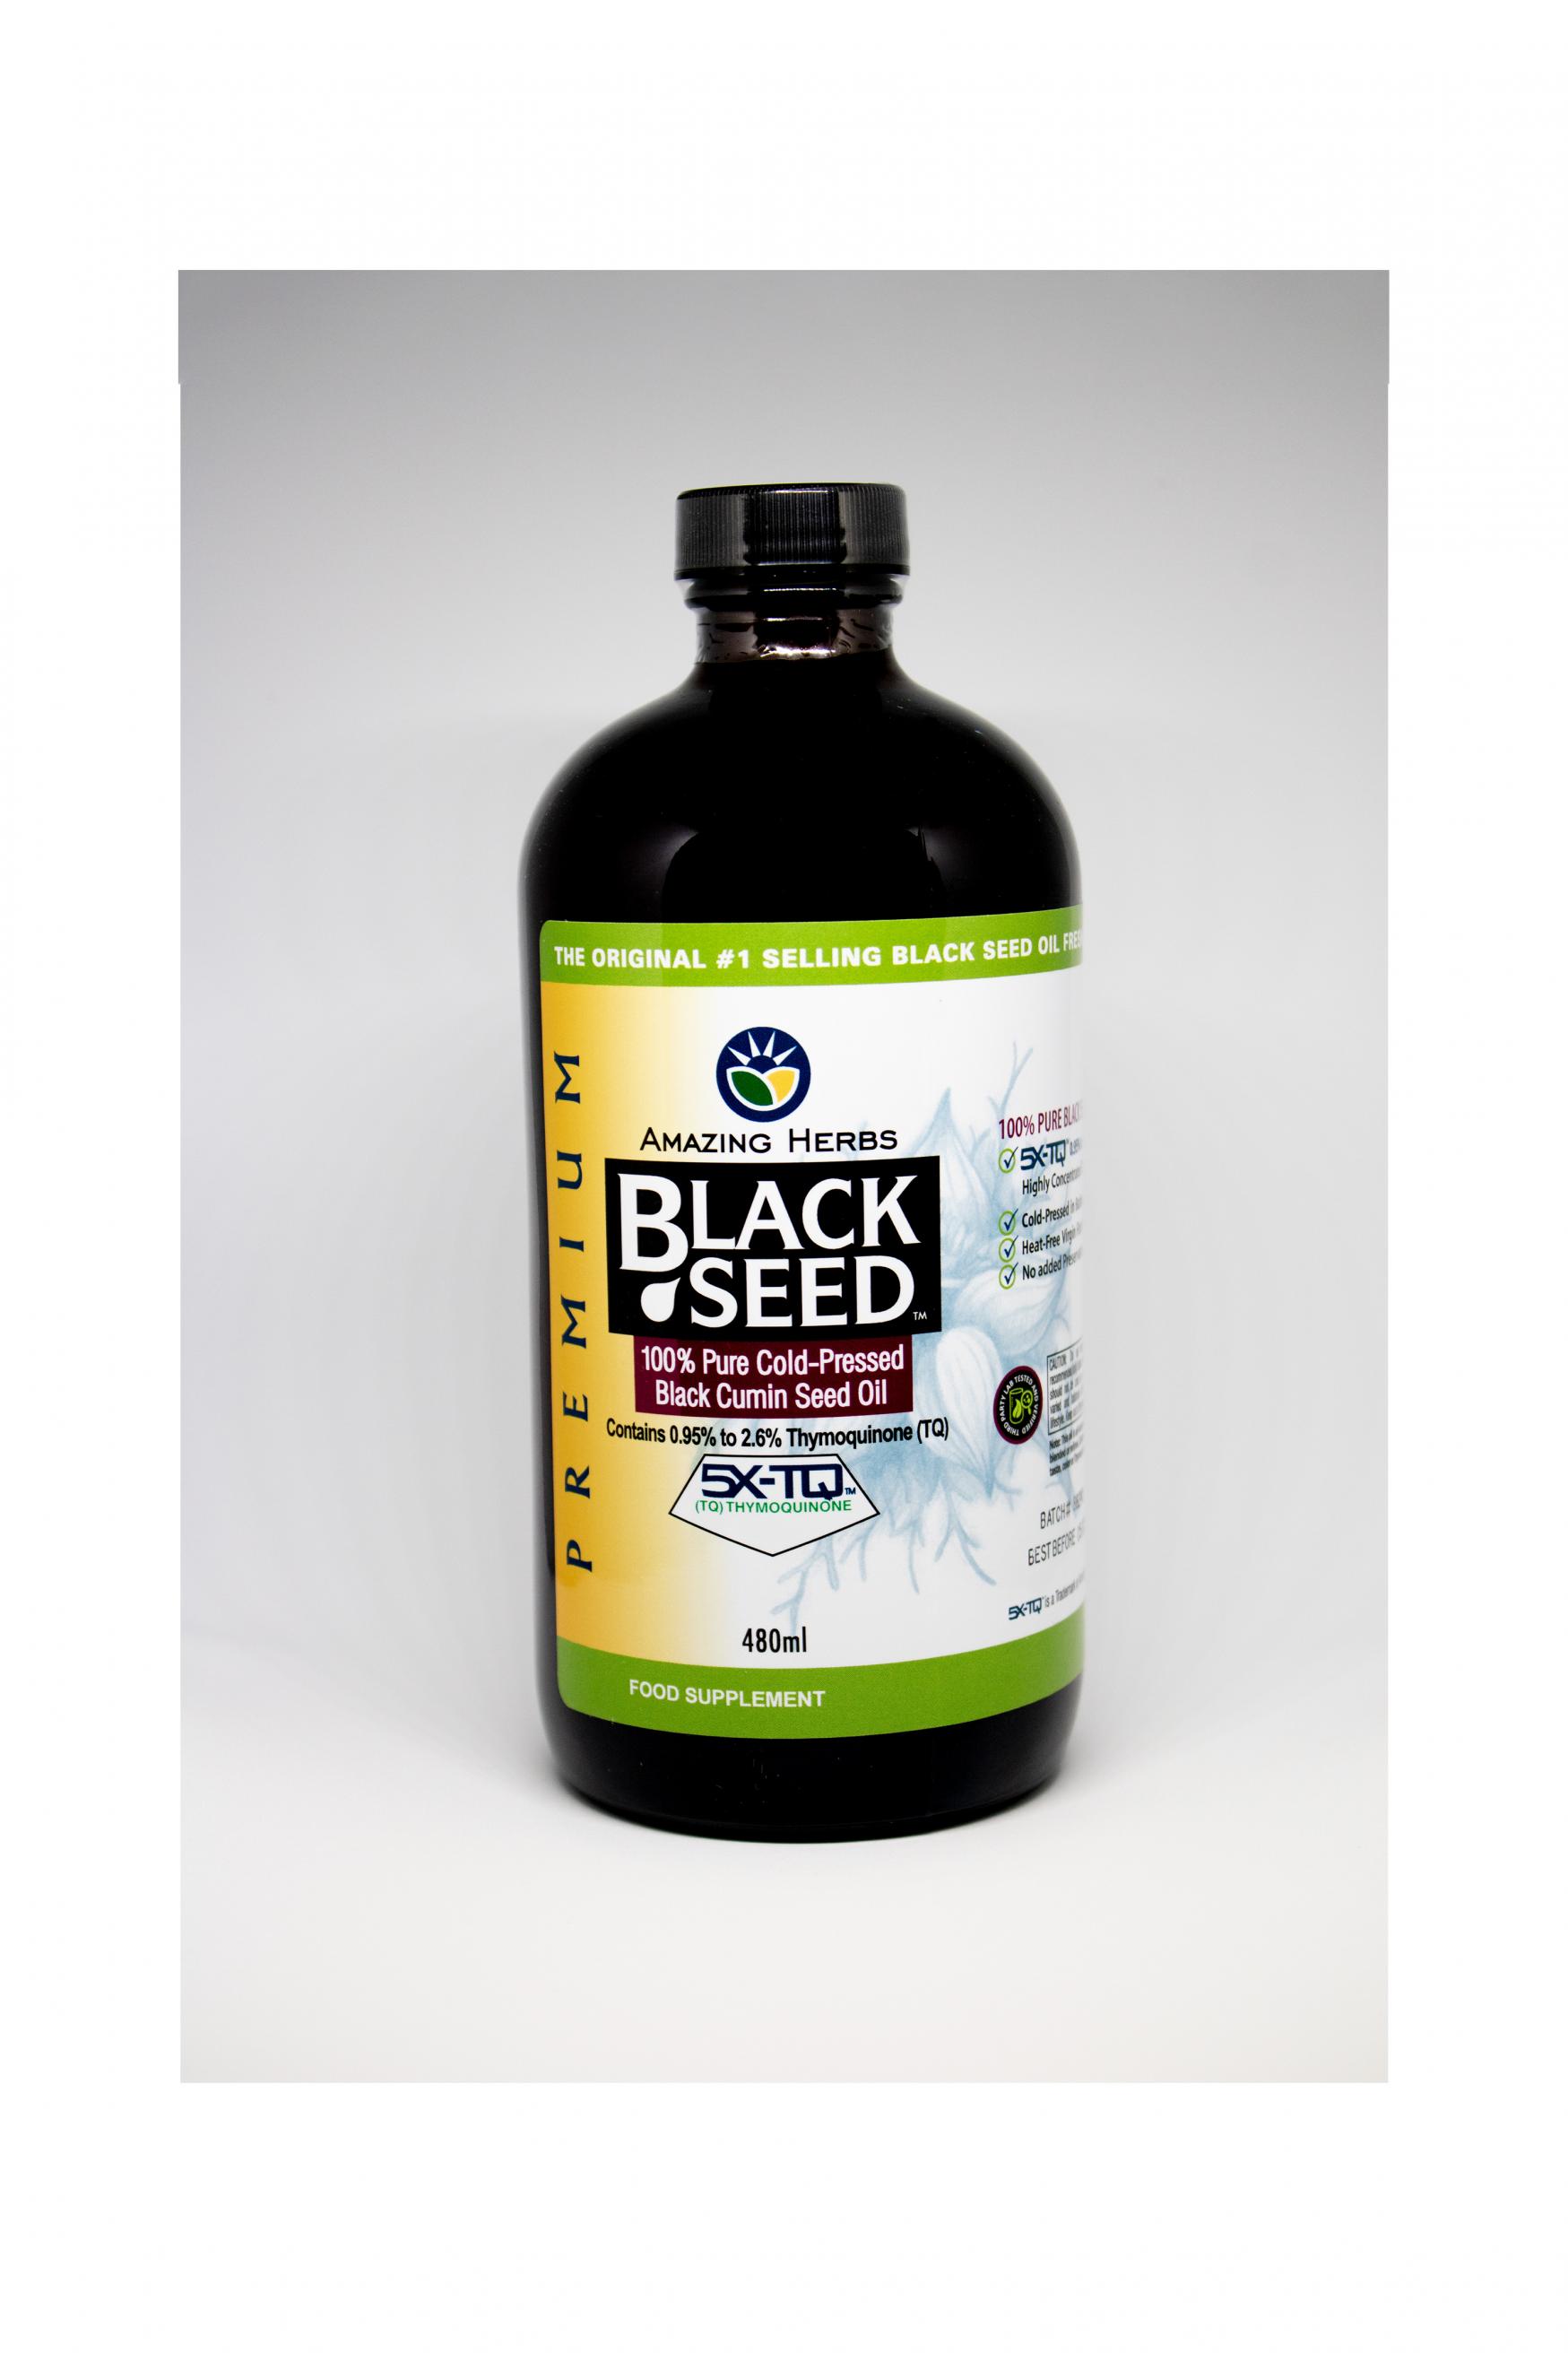 Premium Black Seed 100% Pure Cold-Pressed Black Cumin Seed Oil 480ml